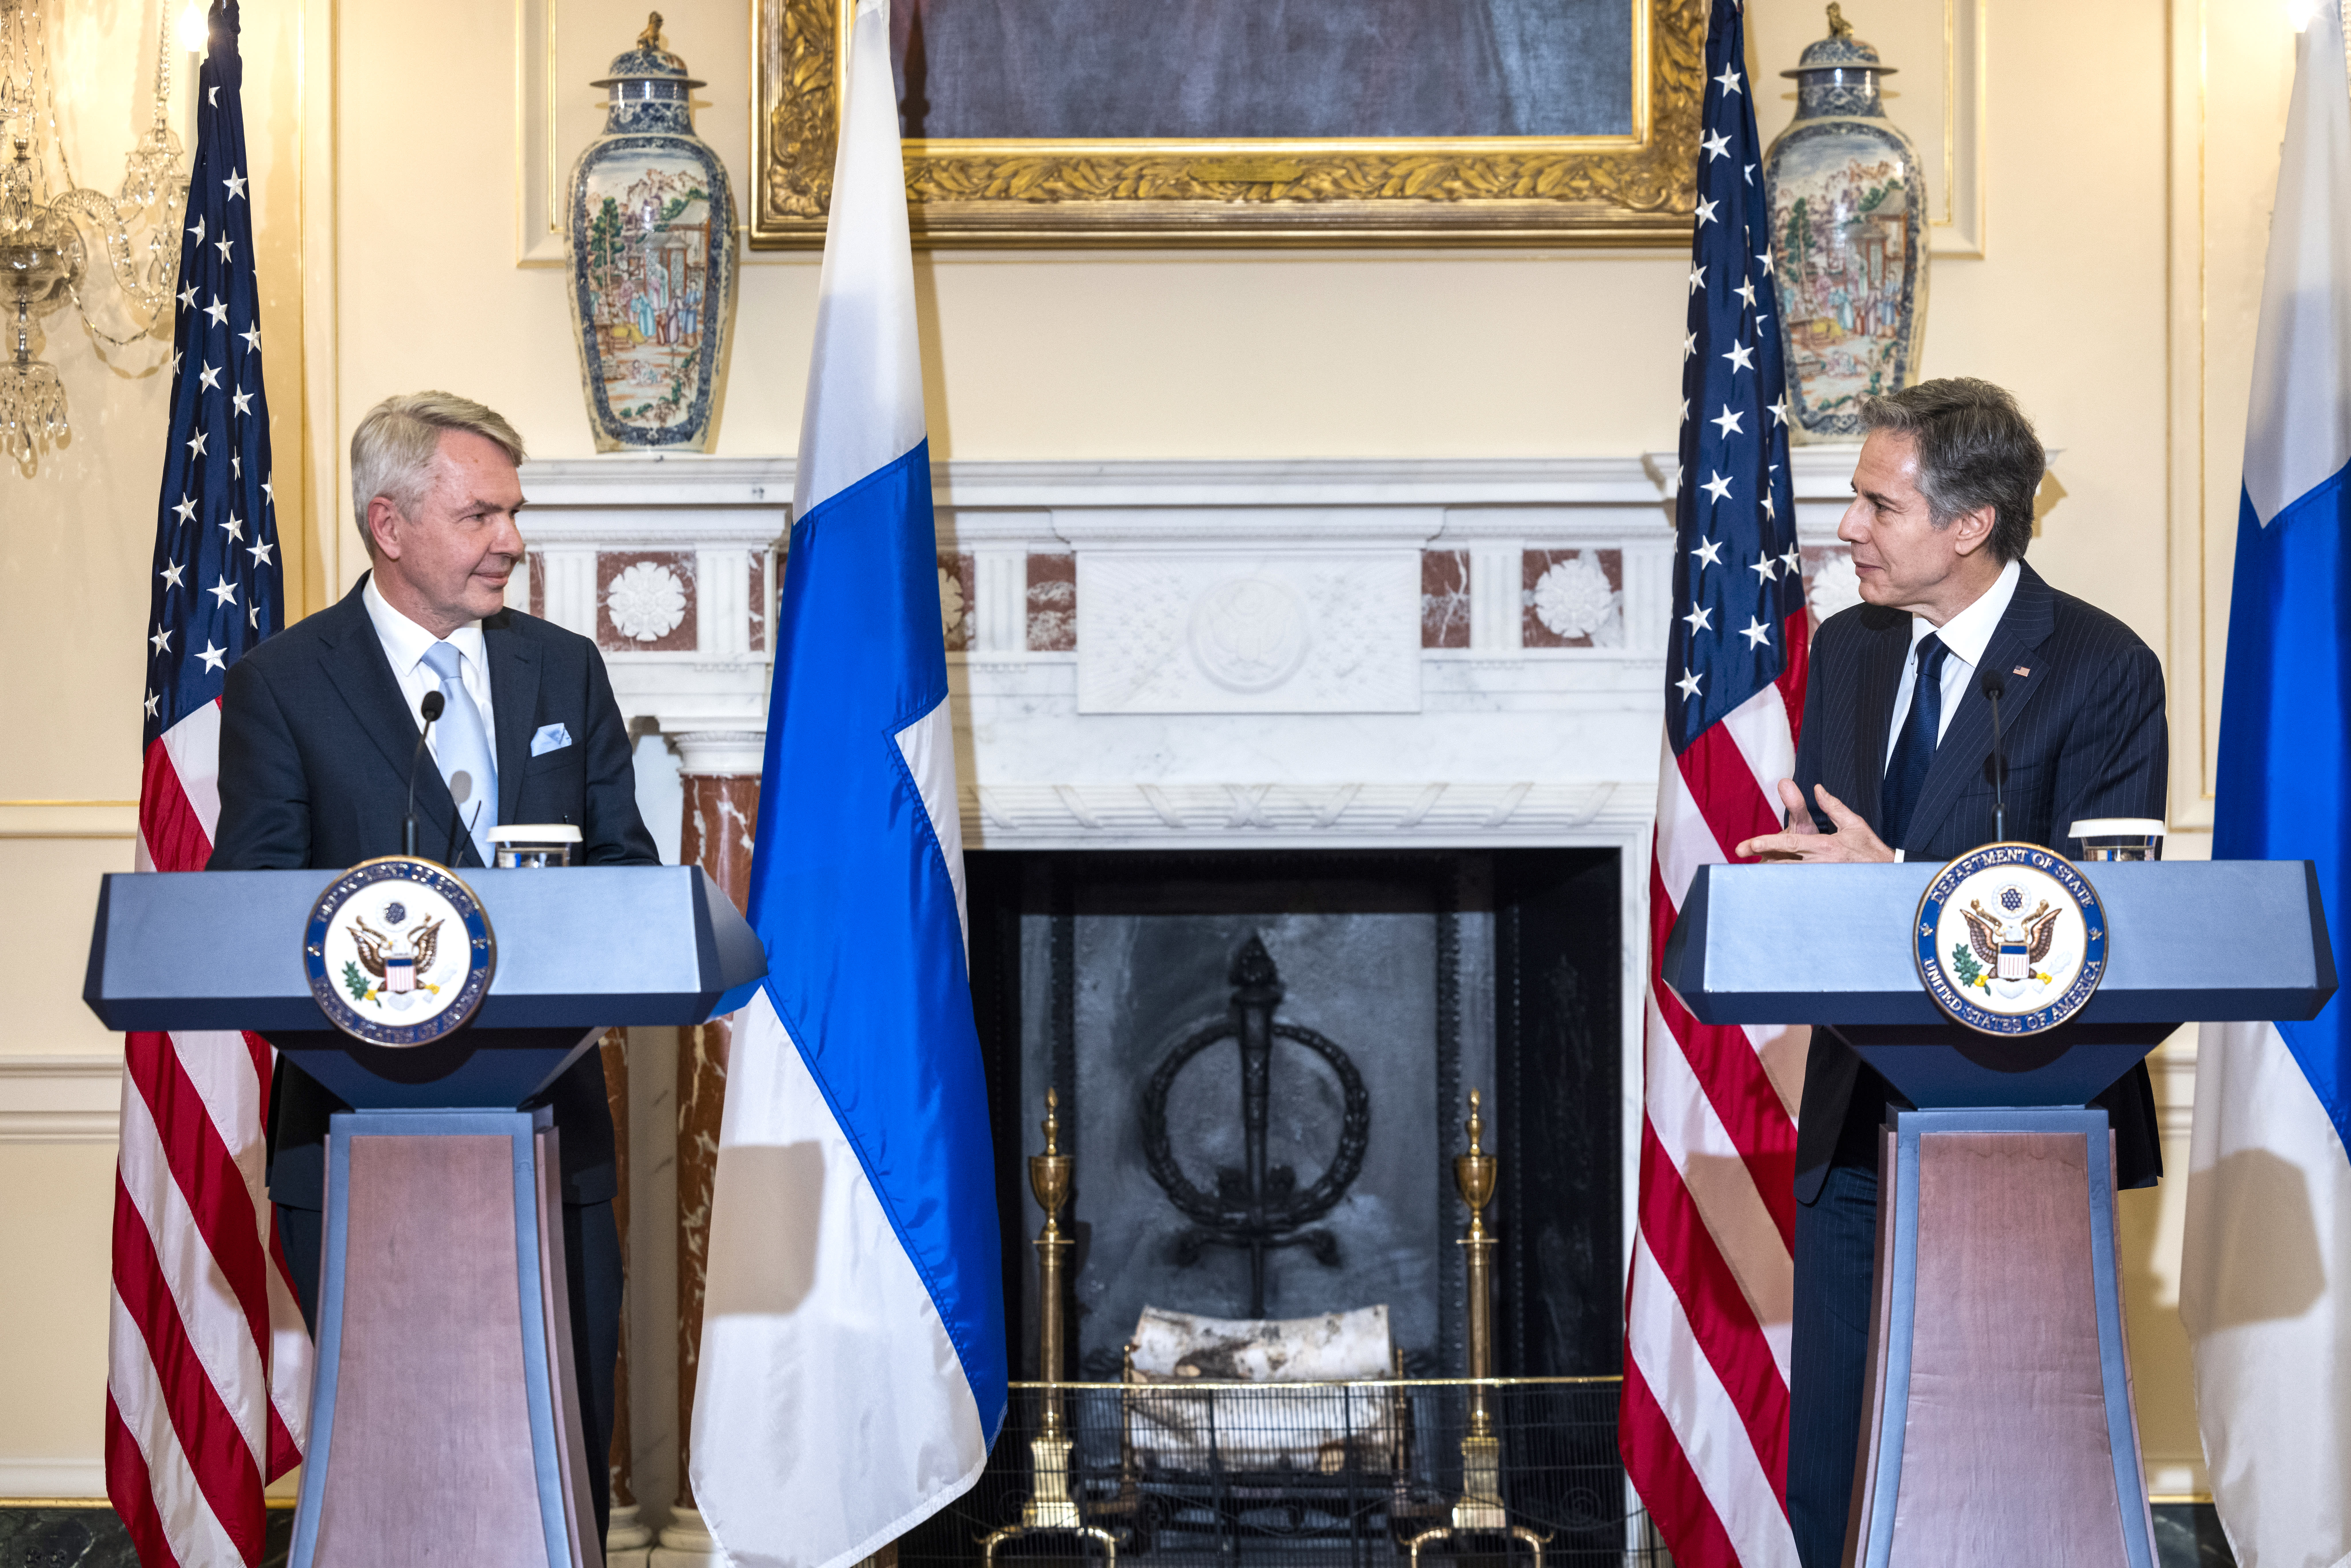 Suomen Haavisto in DC discusses NATO membership, Ukraine and security